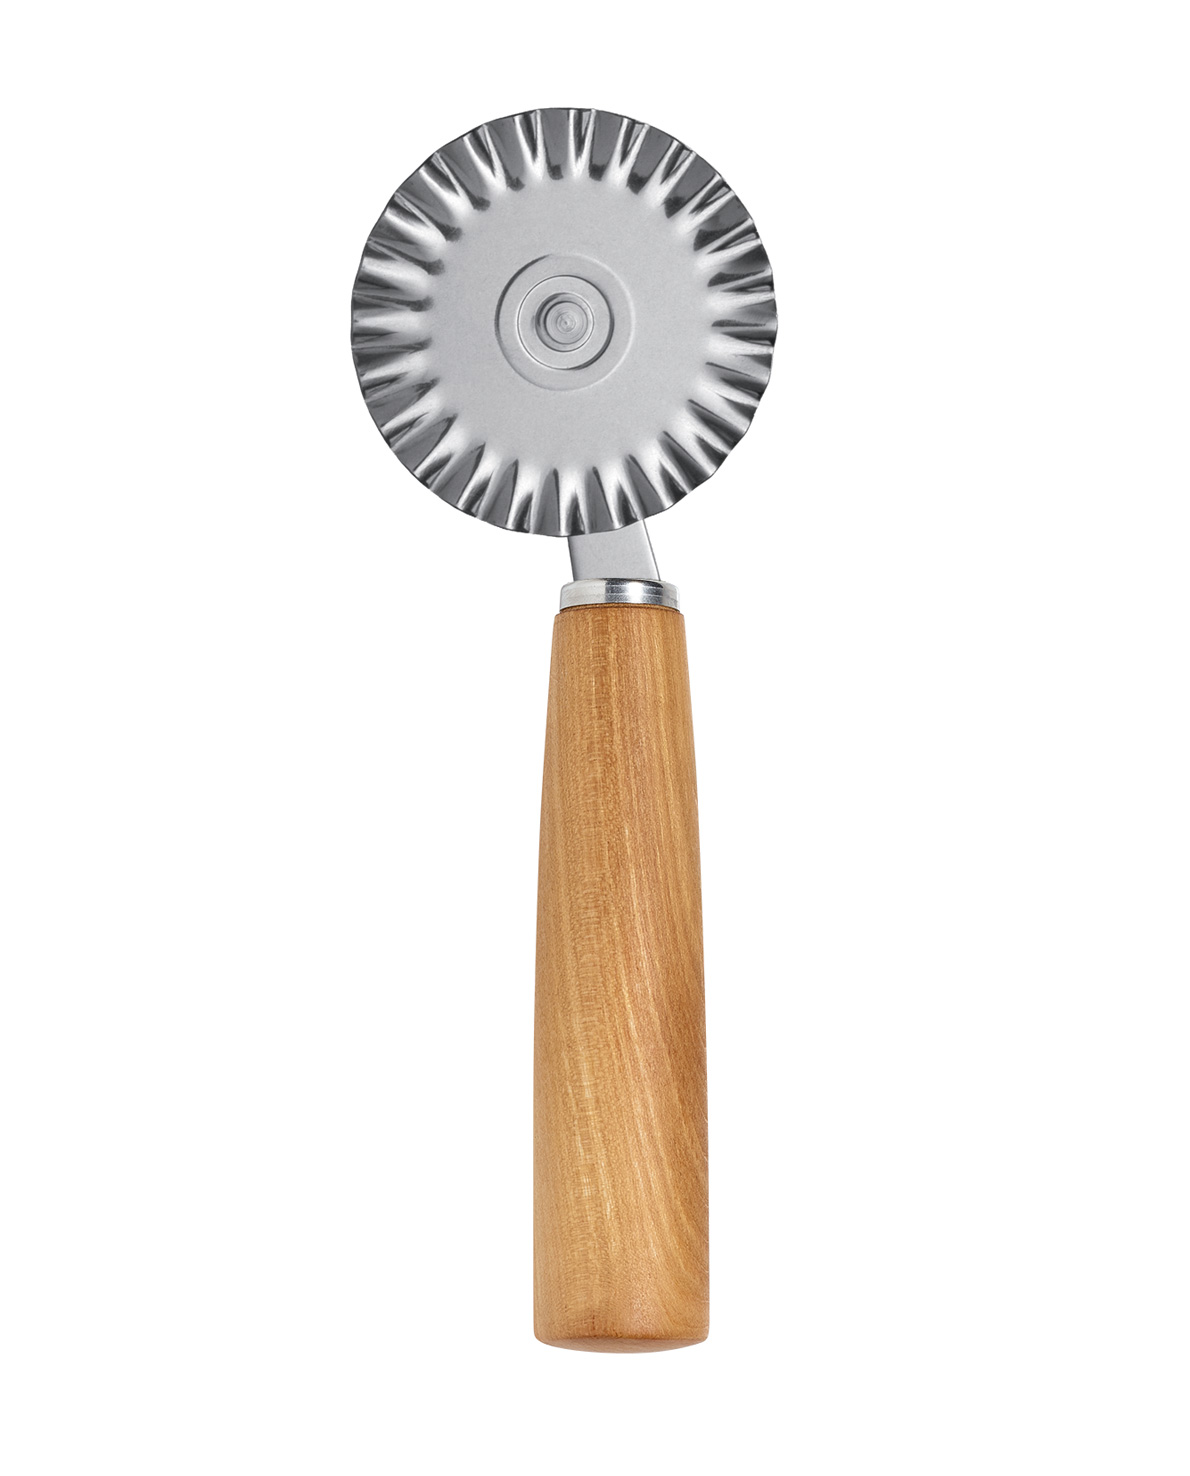 Pastry wheel mood with German cherry wood handle